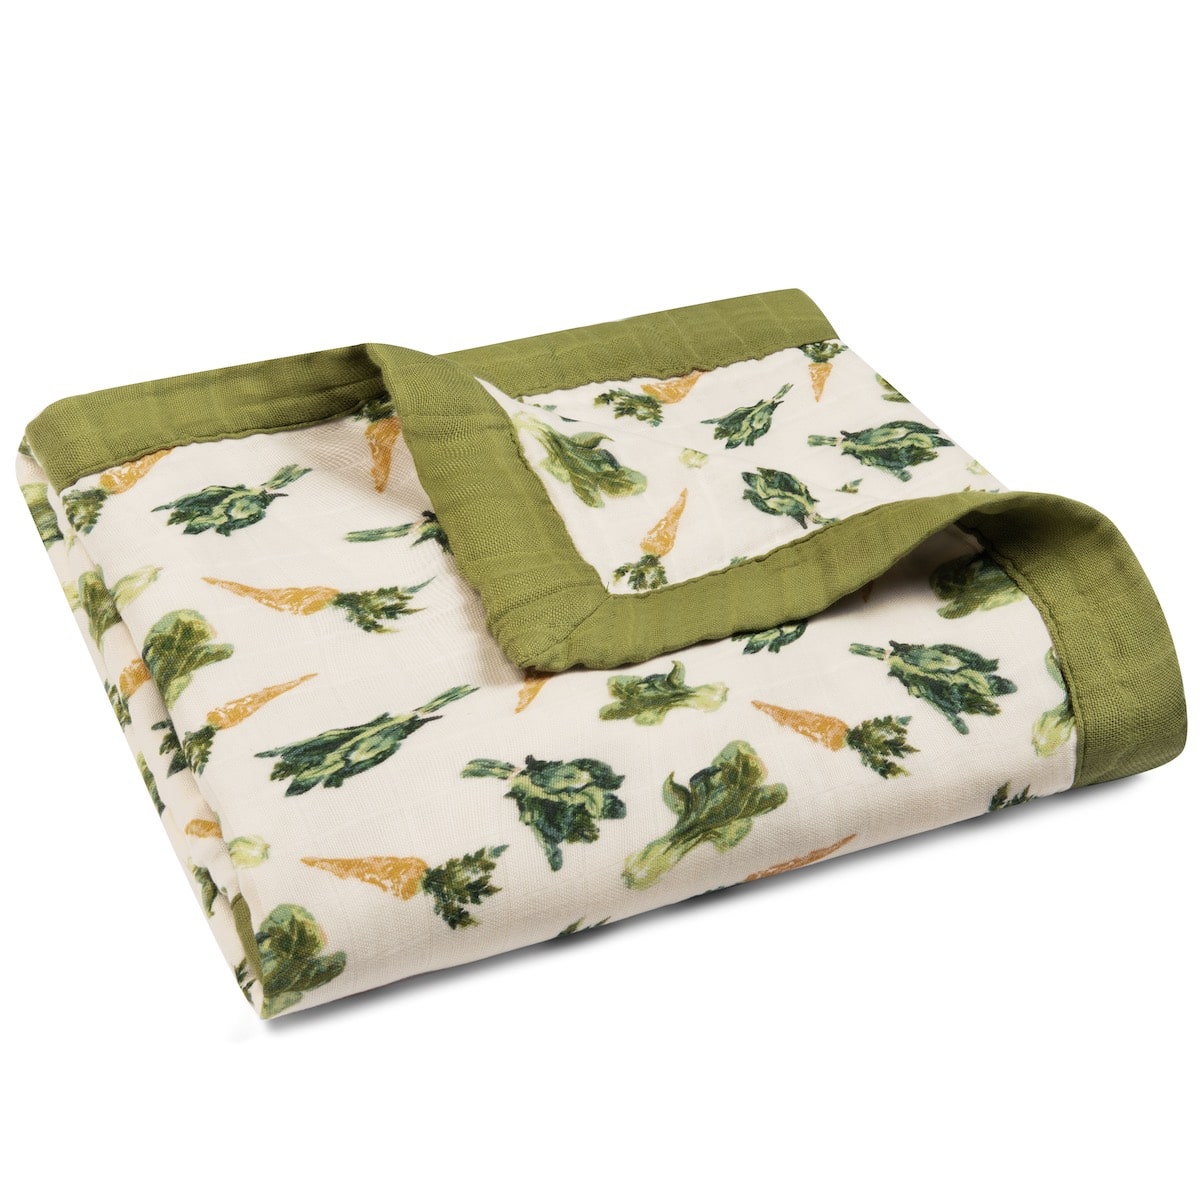 64135 - Fresh Veggies Three Layer Bamboo and Organic Cotton Big Lovey Folded Baby Blanket by Milkbarn